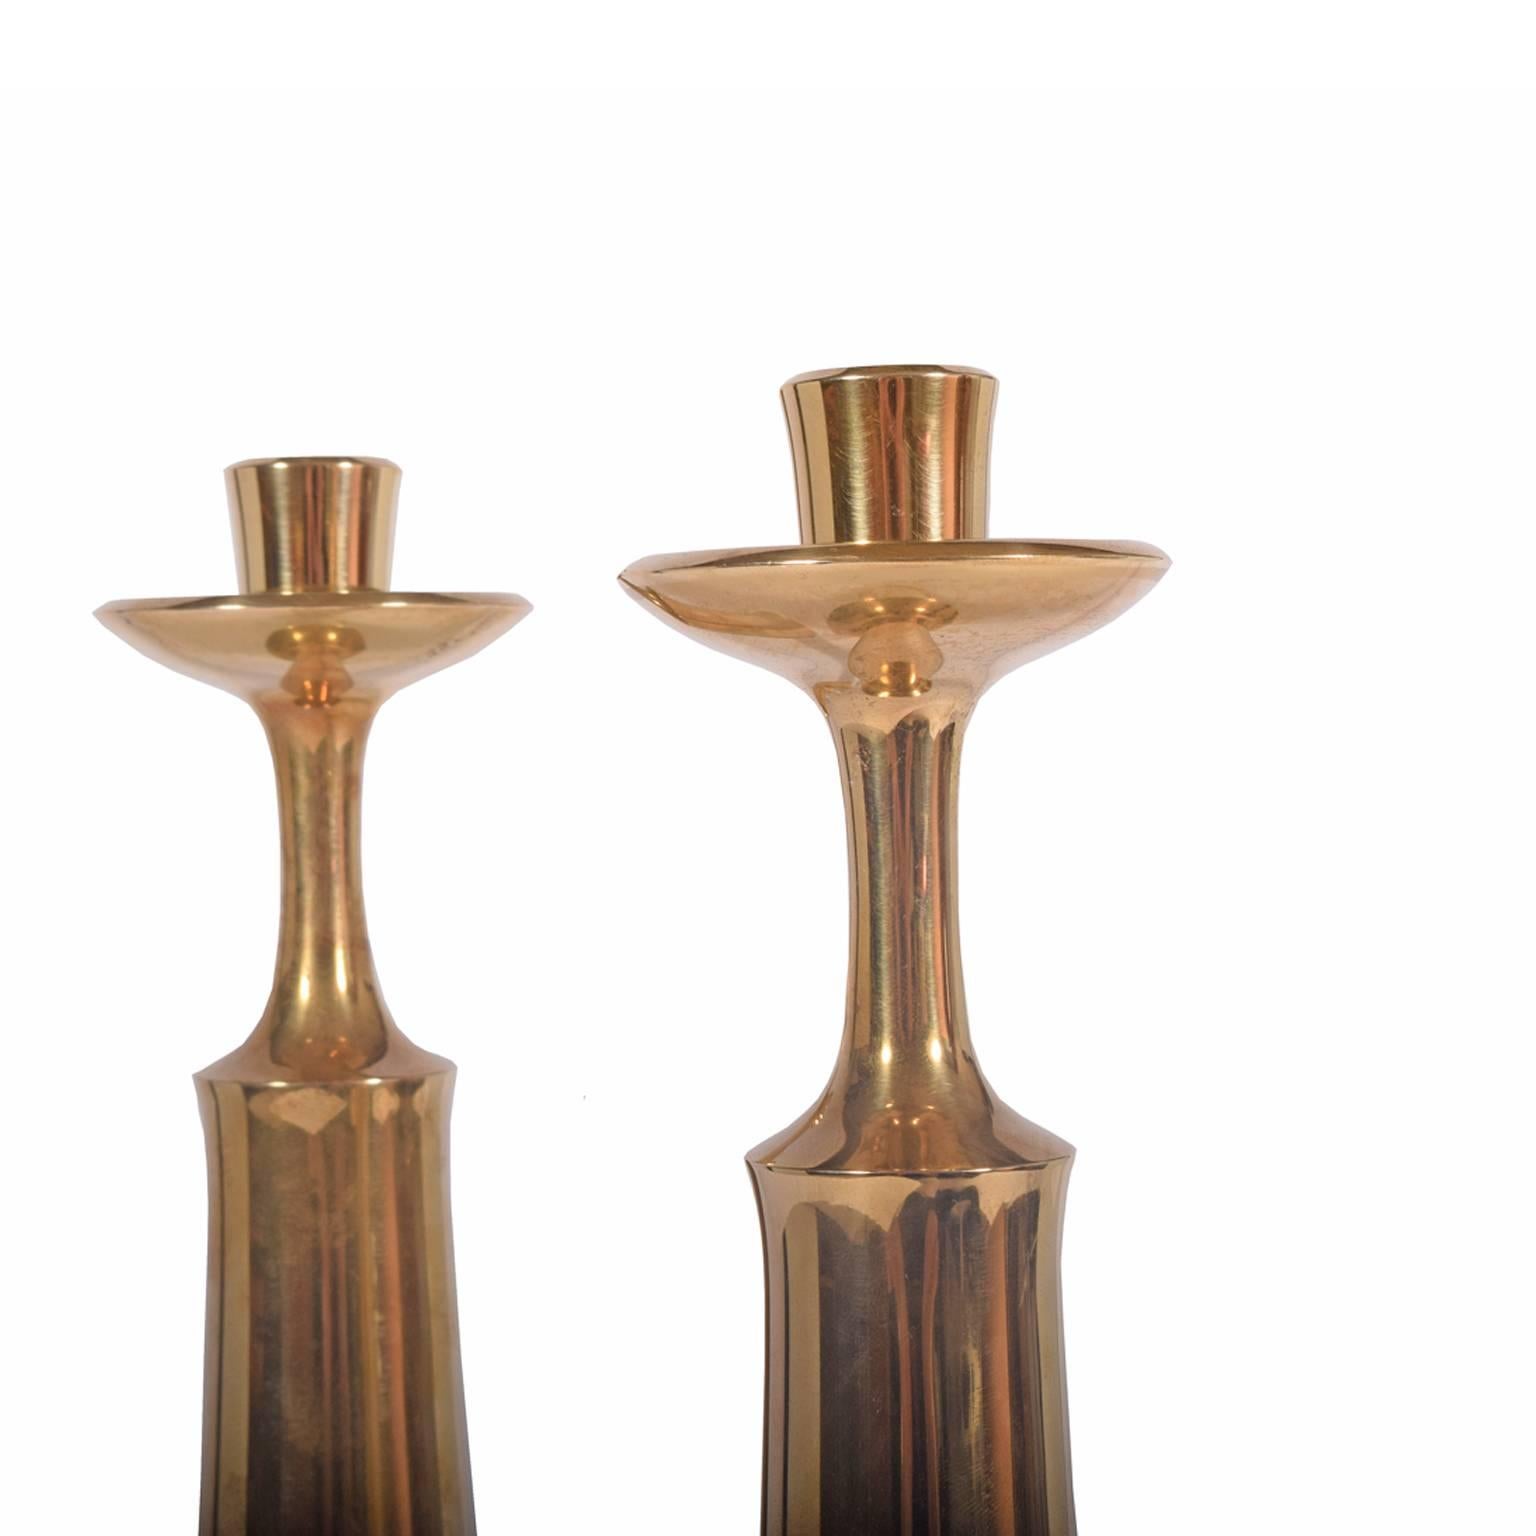 Solid brass candlesticks signed: Danish Design, JHQ.